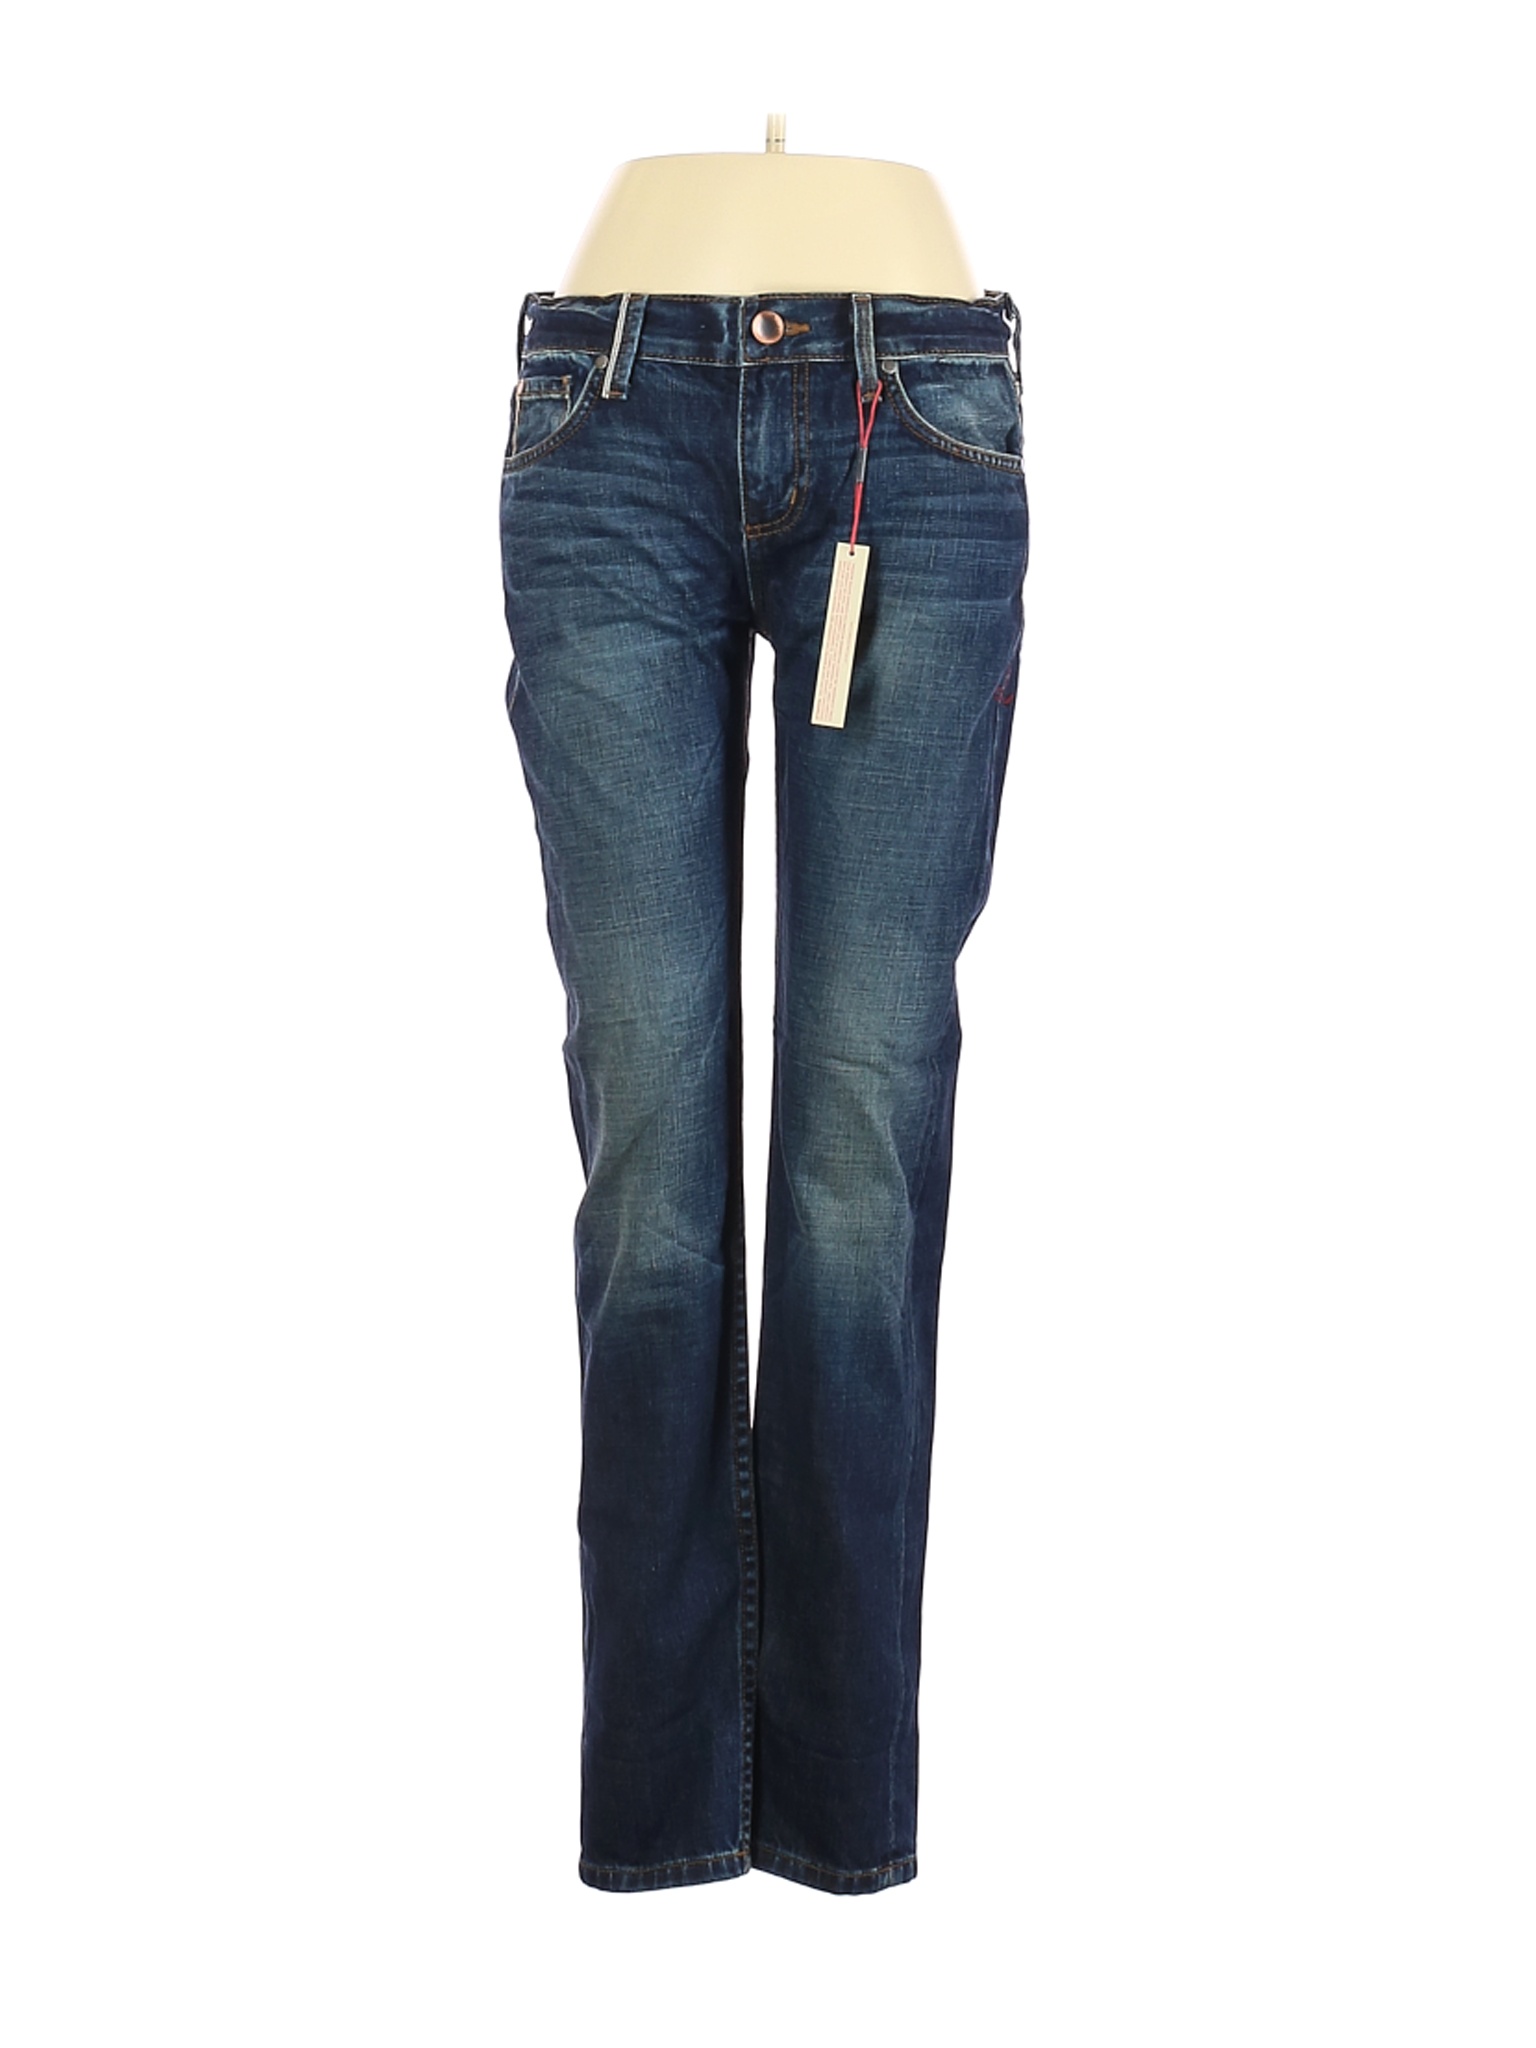 NWT Level 99 Women Blue Jeans 26W | eBay